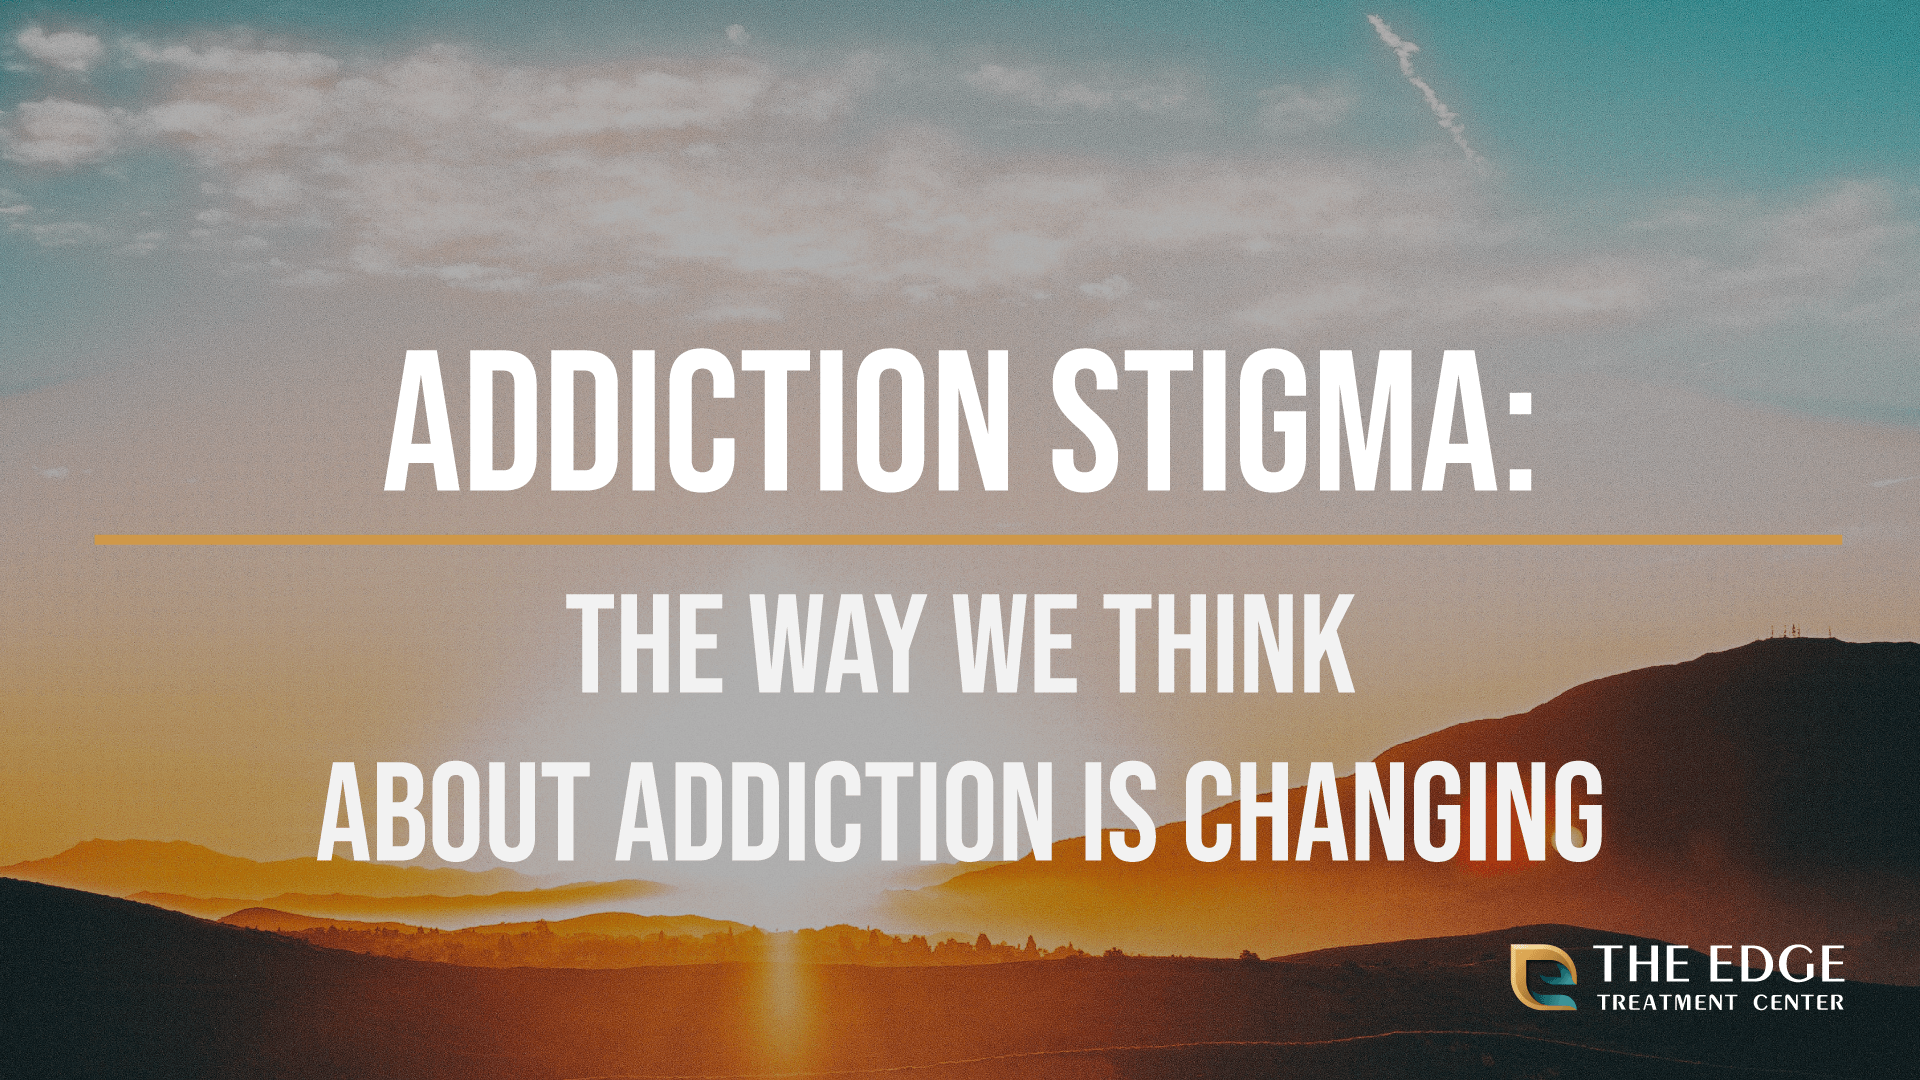 How Addiction Stigma is Changing